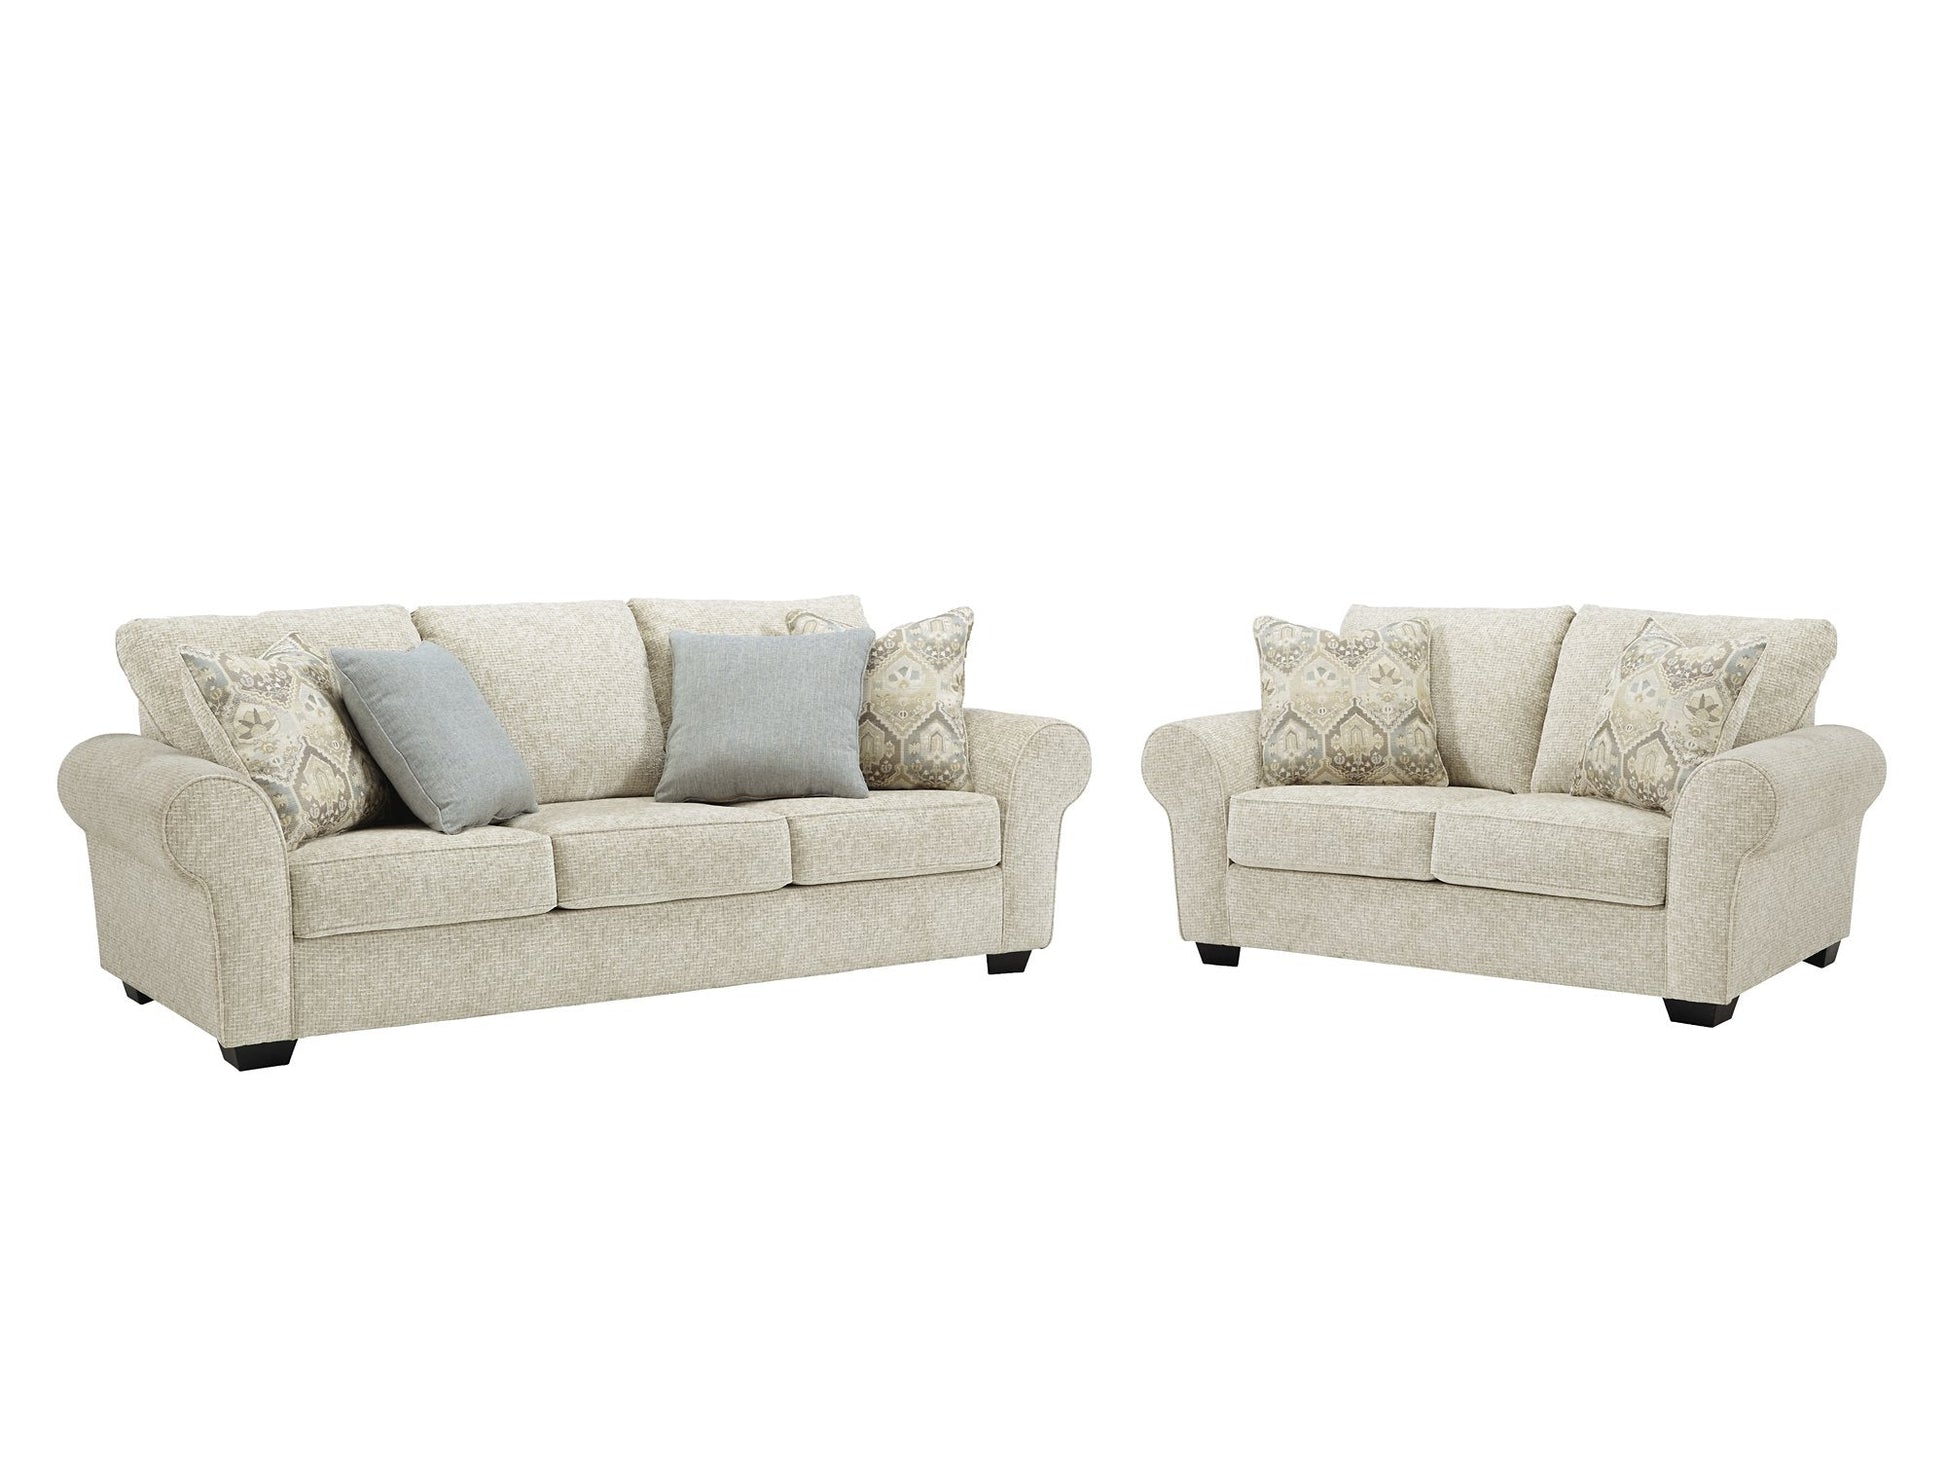 Haisley Benchcraft 2-Piece Living Room Set image